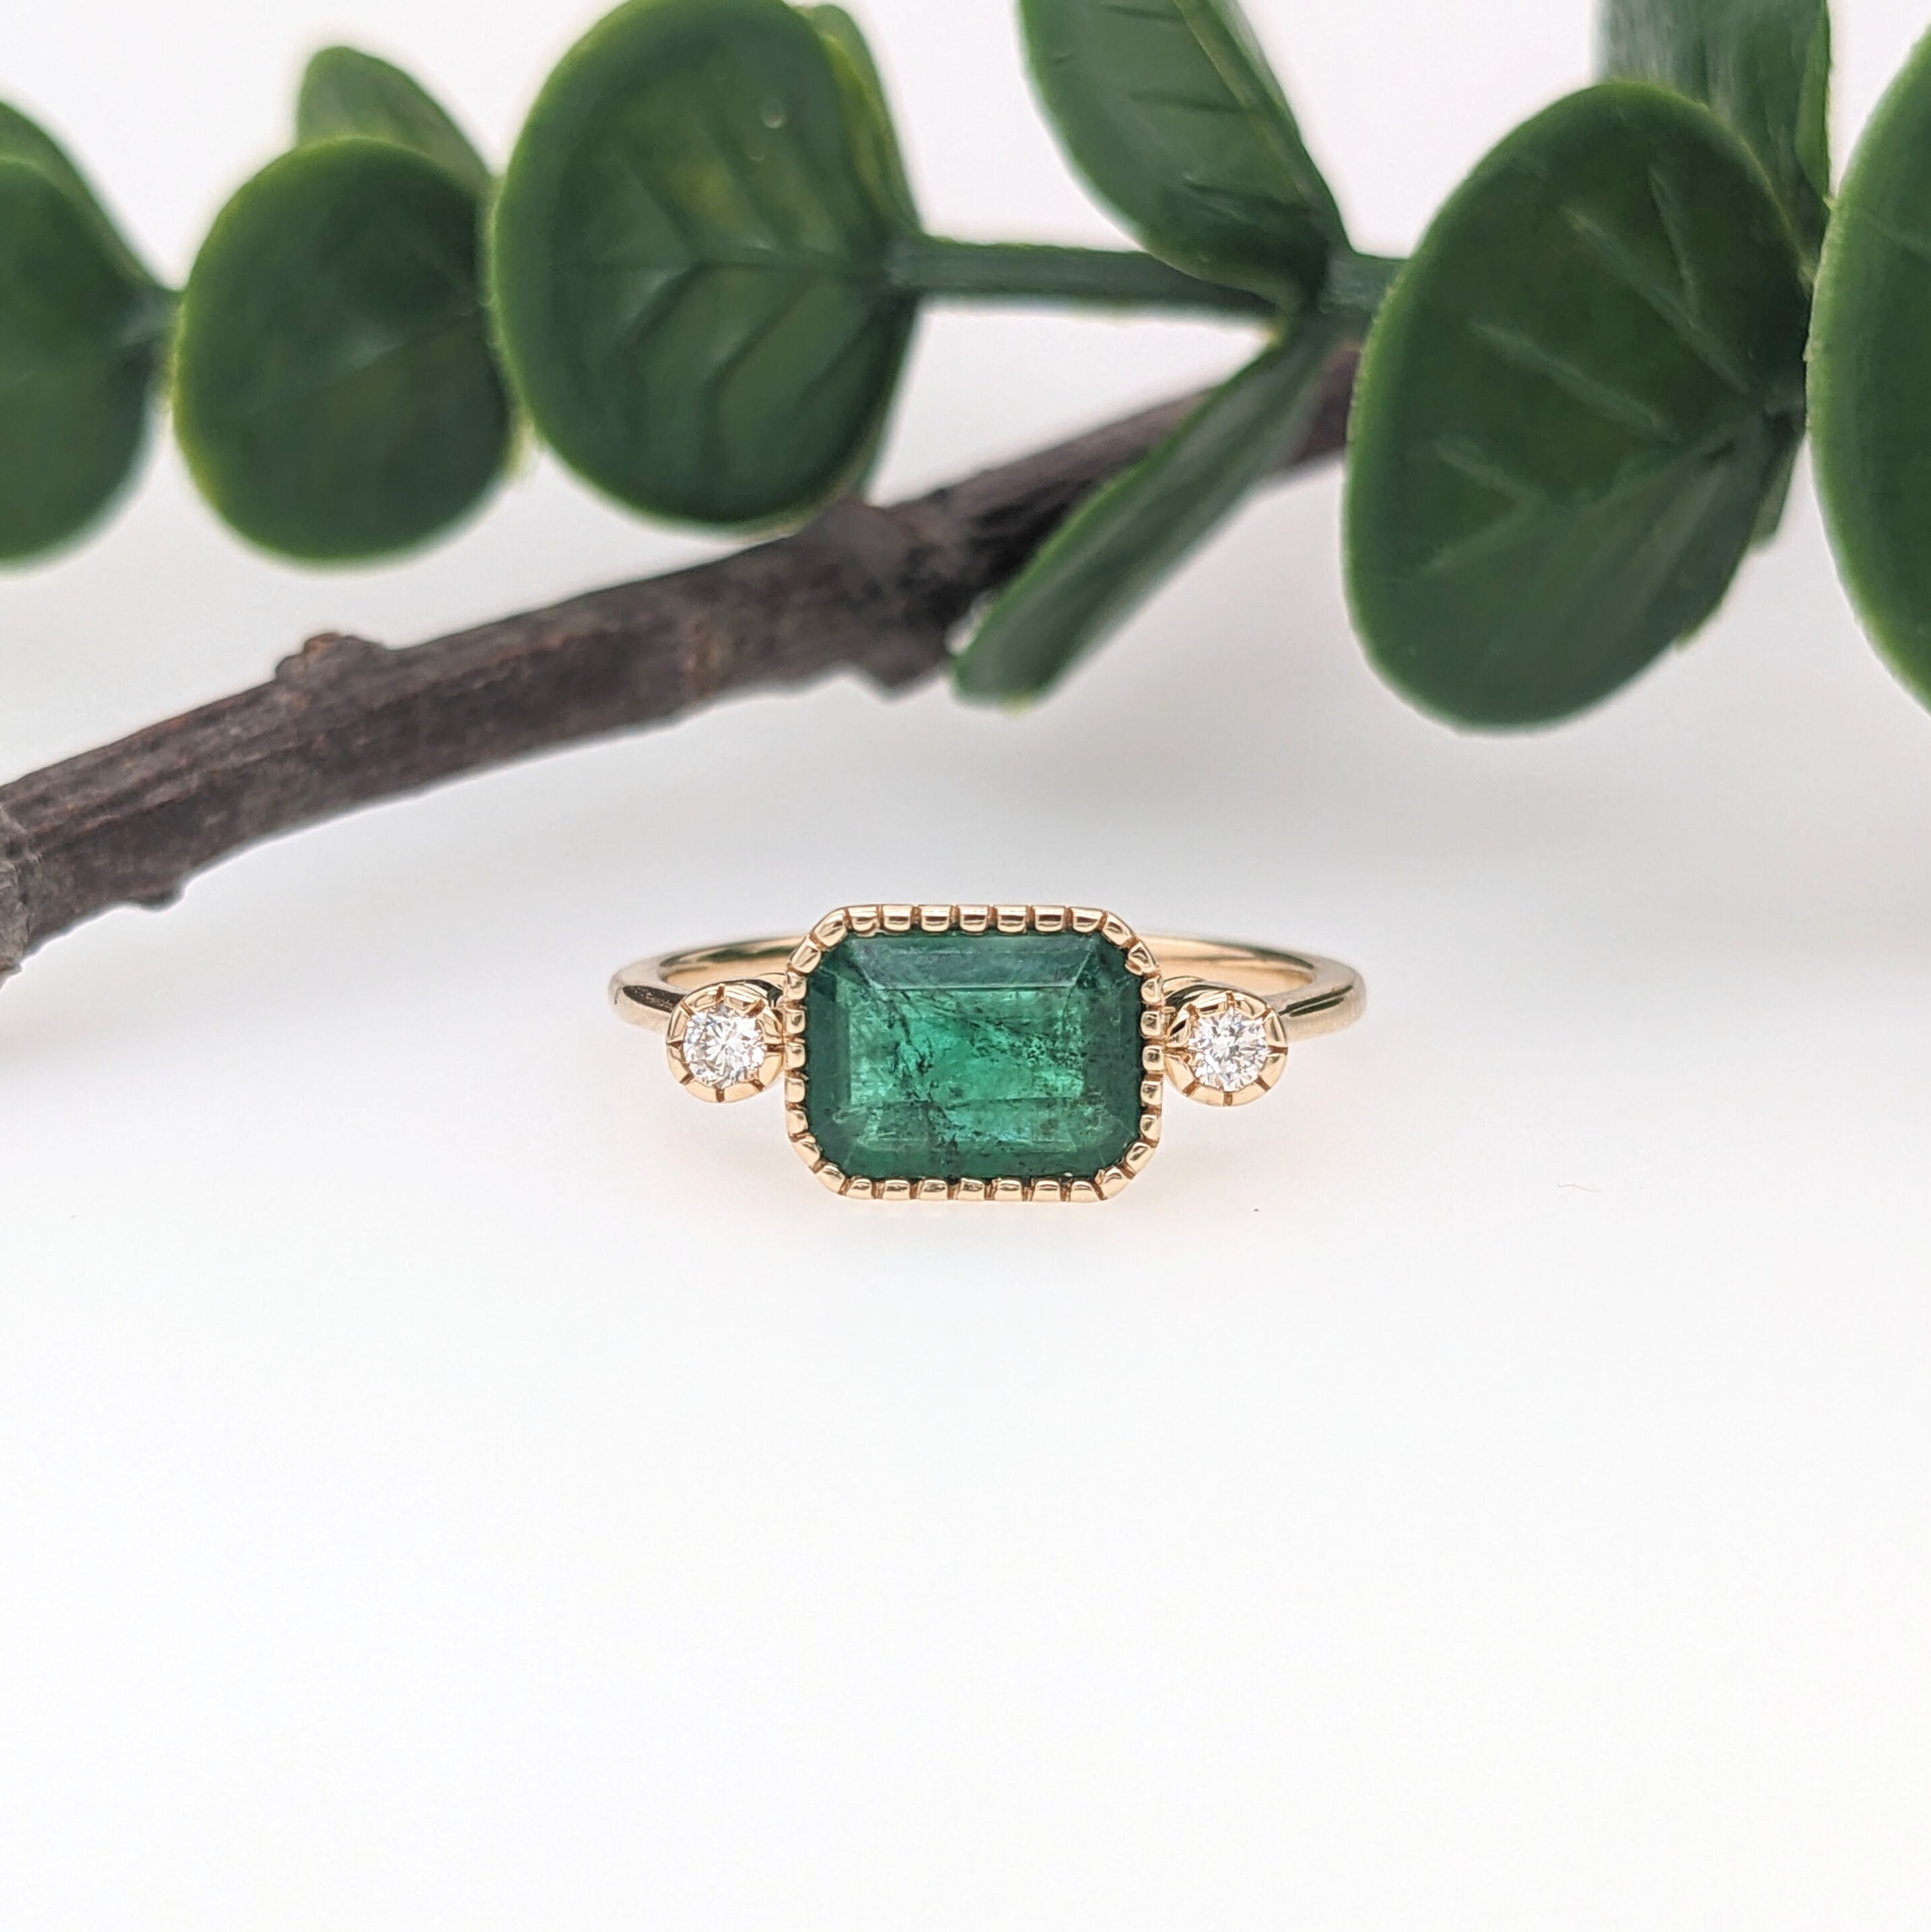 Elegant Emerald Ring in Solid 14K Yellow Gold I Emerald Cut 8x6mm I Zambian Emerald I Green Gemstone Ring I May Birthstone | Milgrain